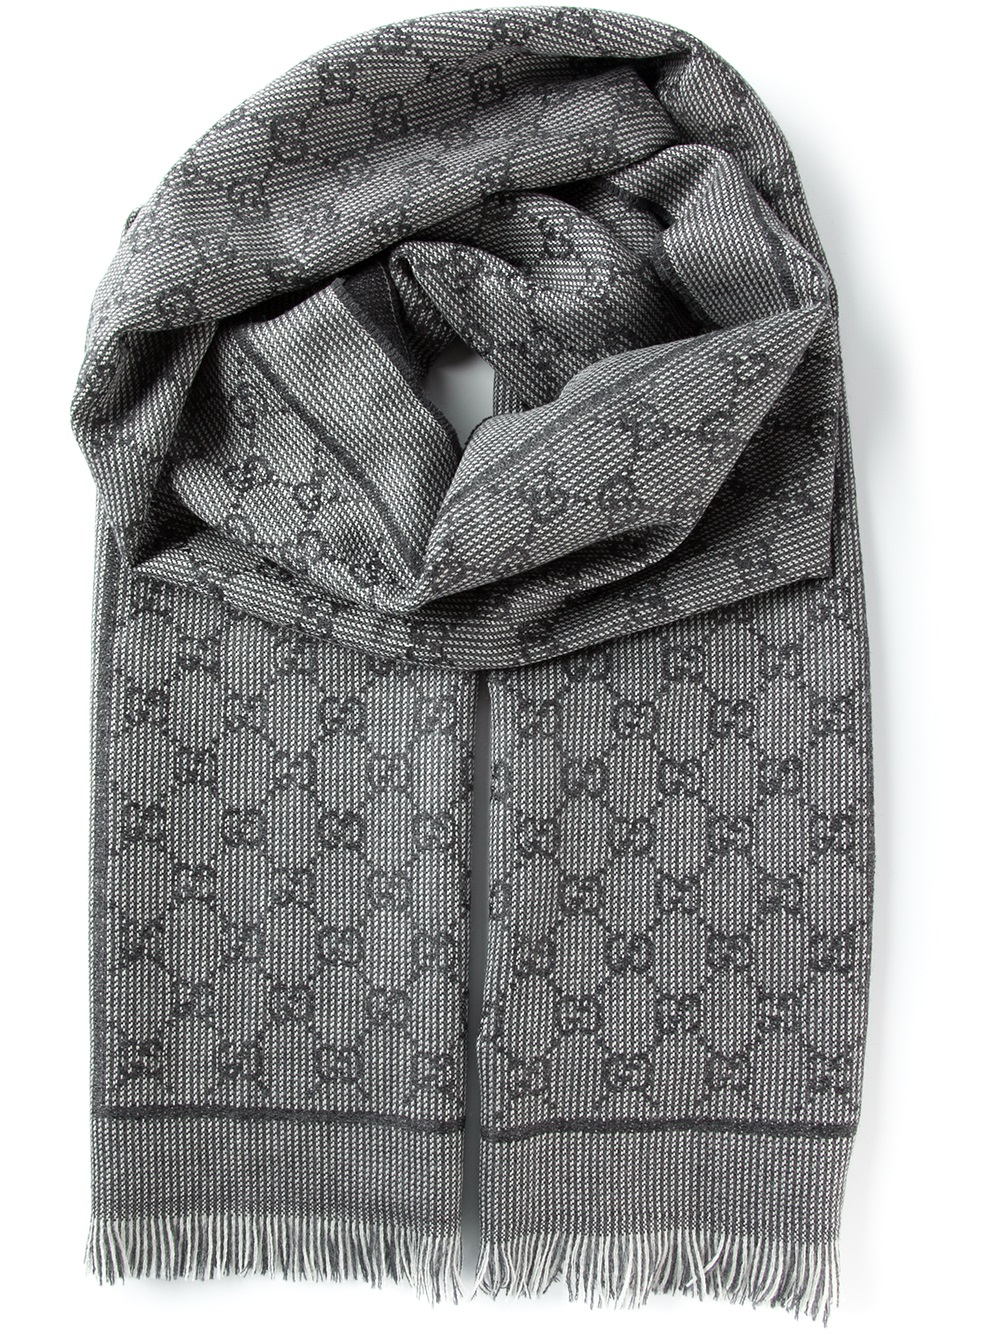 Gucci Wool Monogram Scarf in Grey (Gray) for Men - Lyst